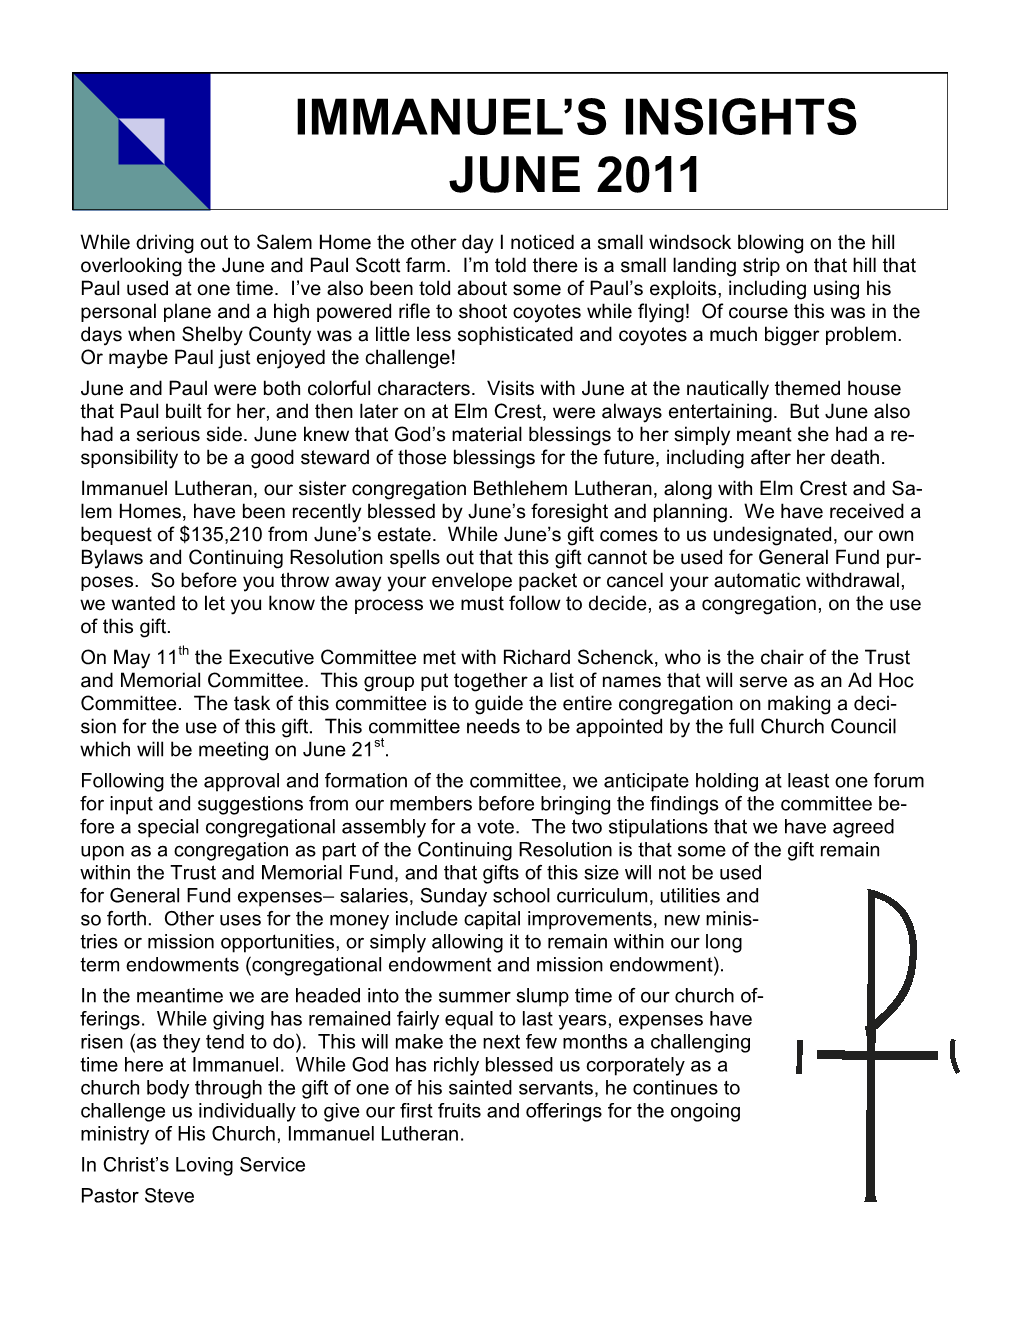 Immanuel's Insights June 2011